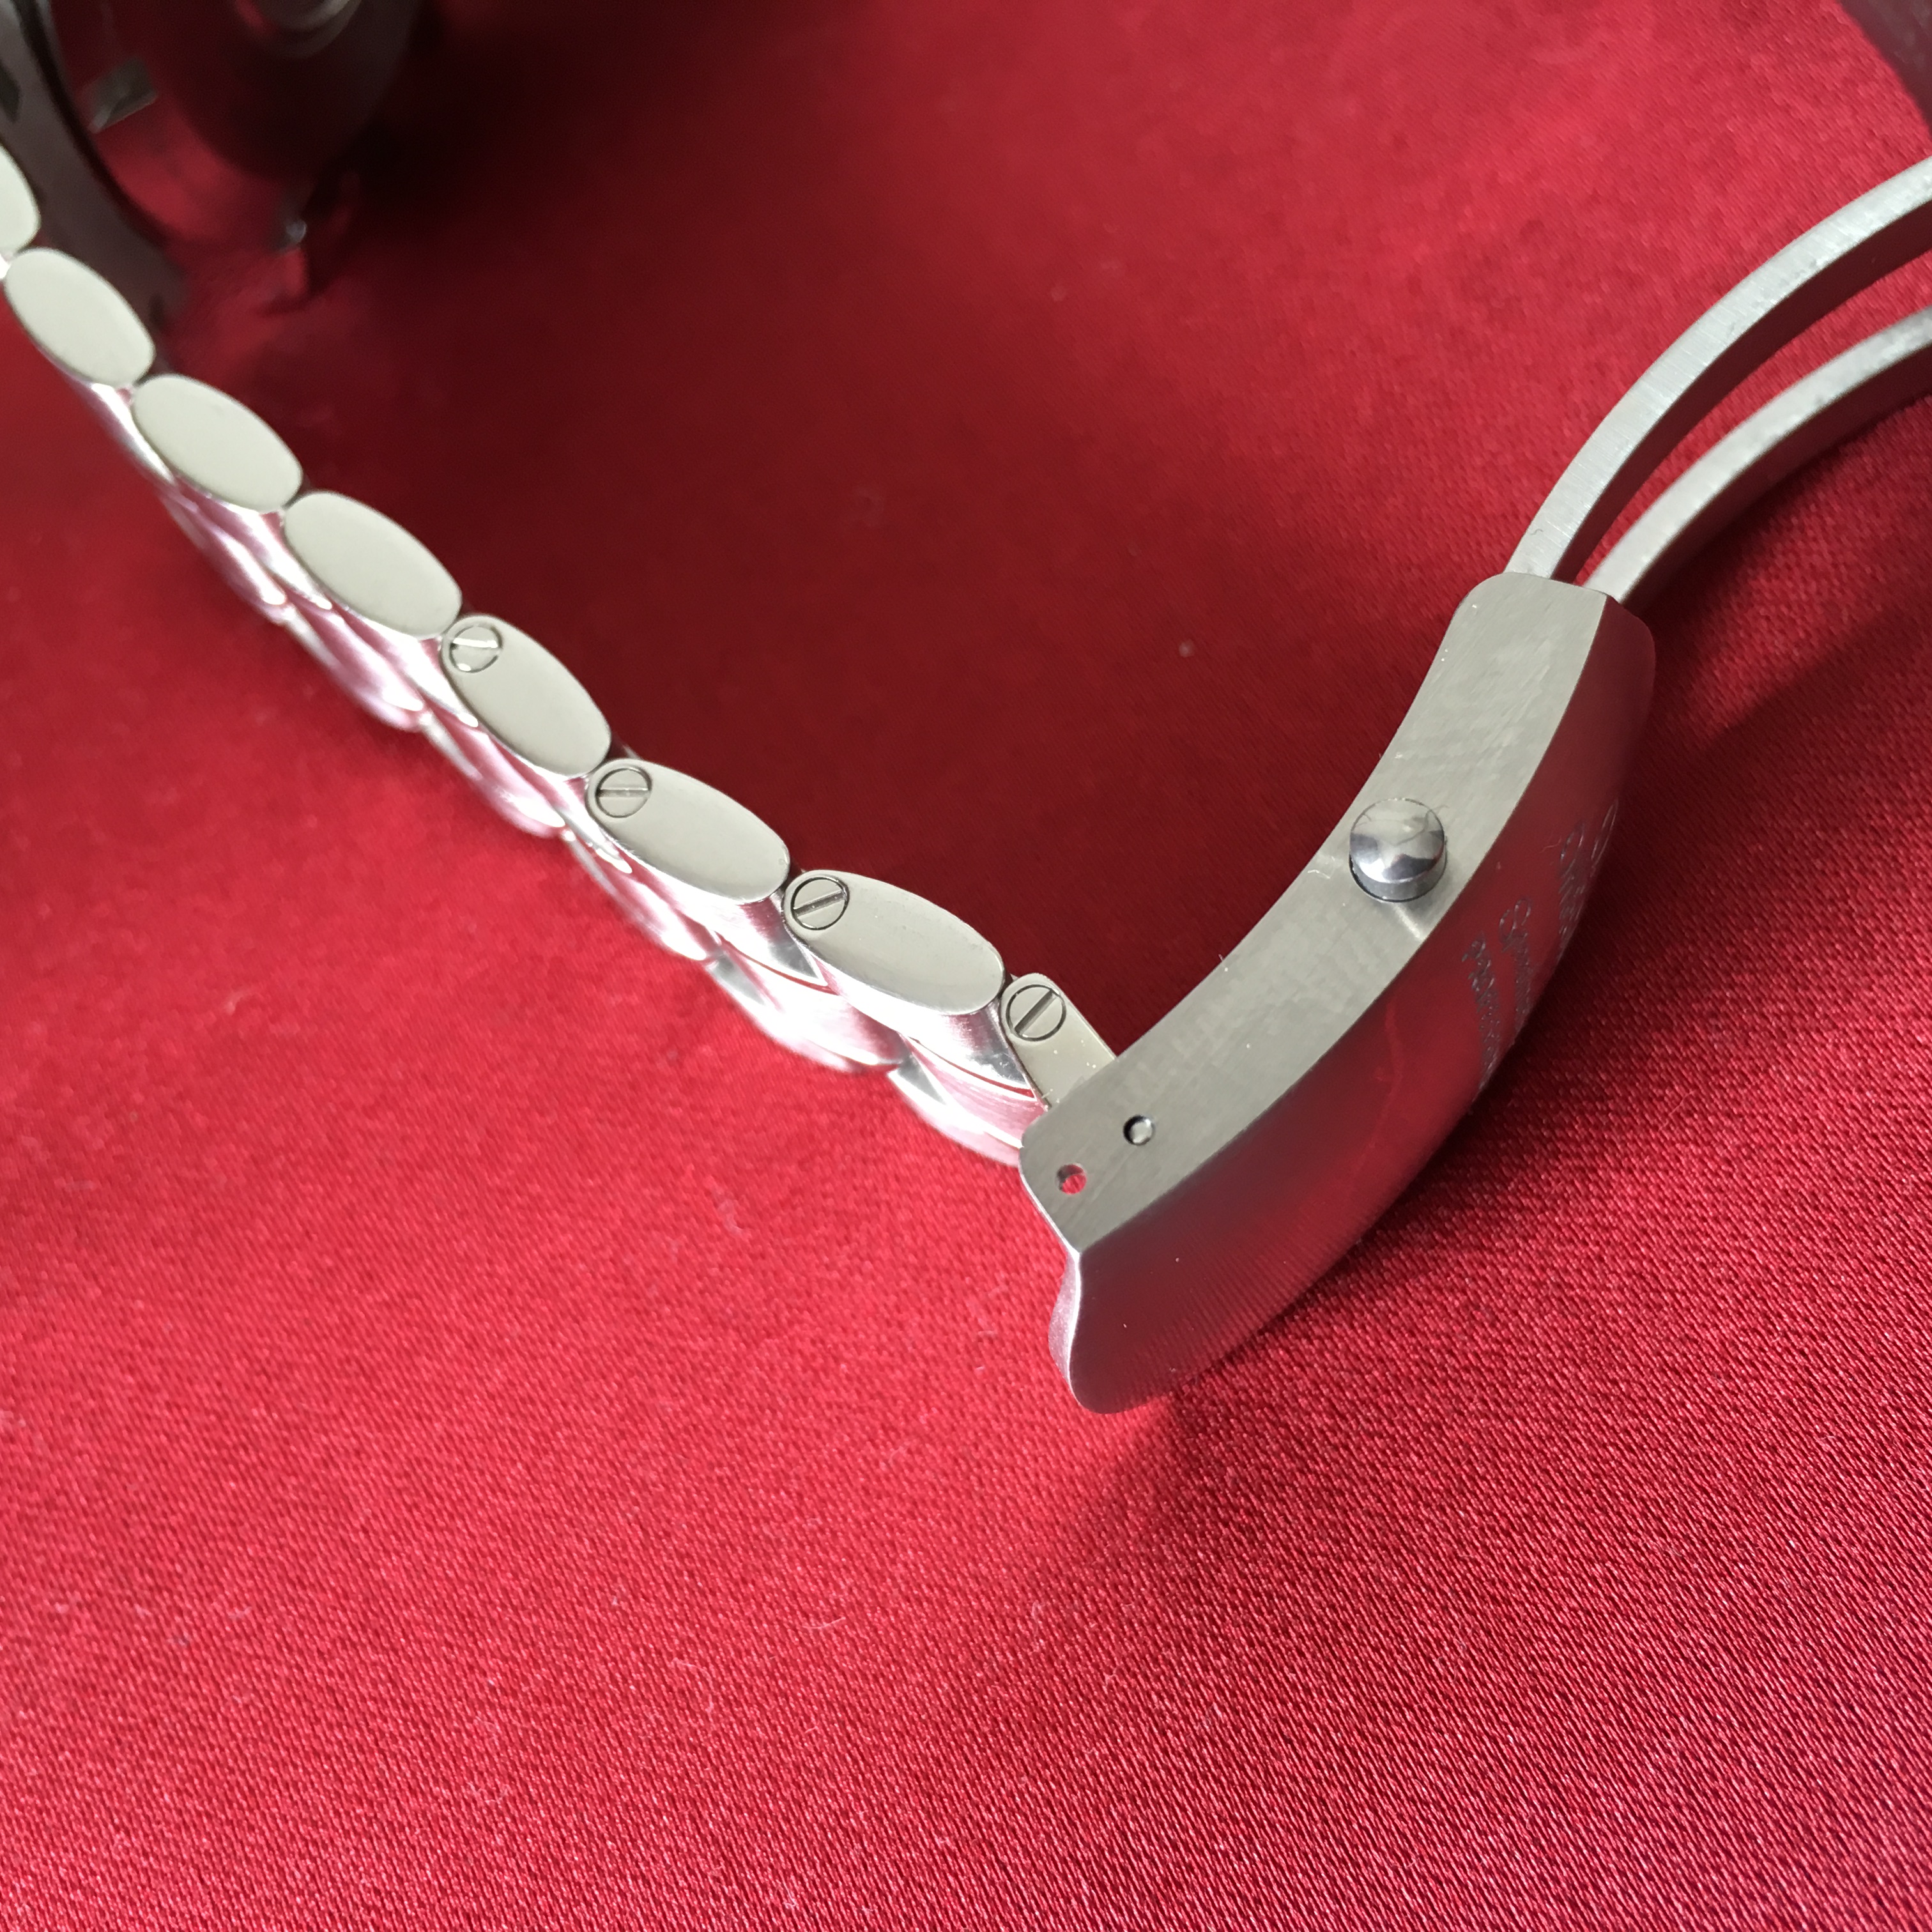 omega speedmaster bracelet adjustment